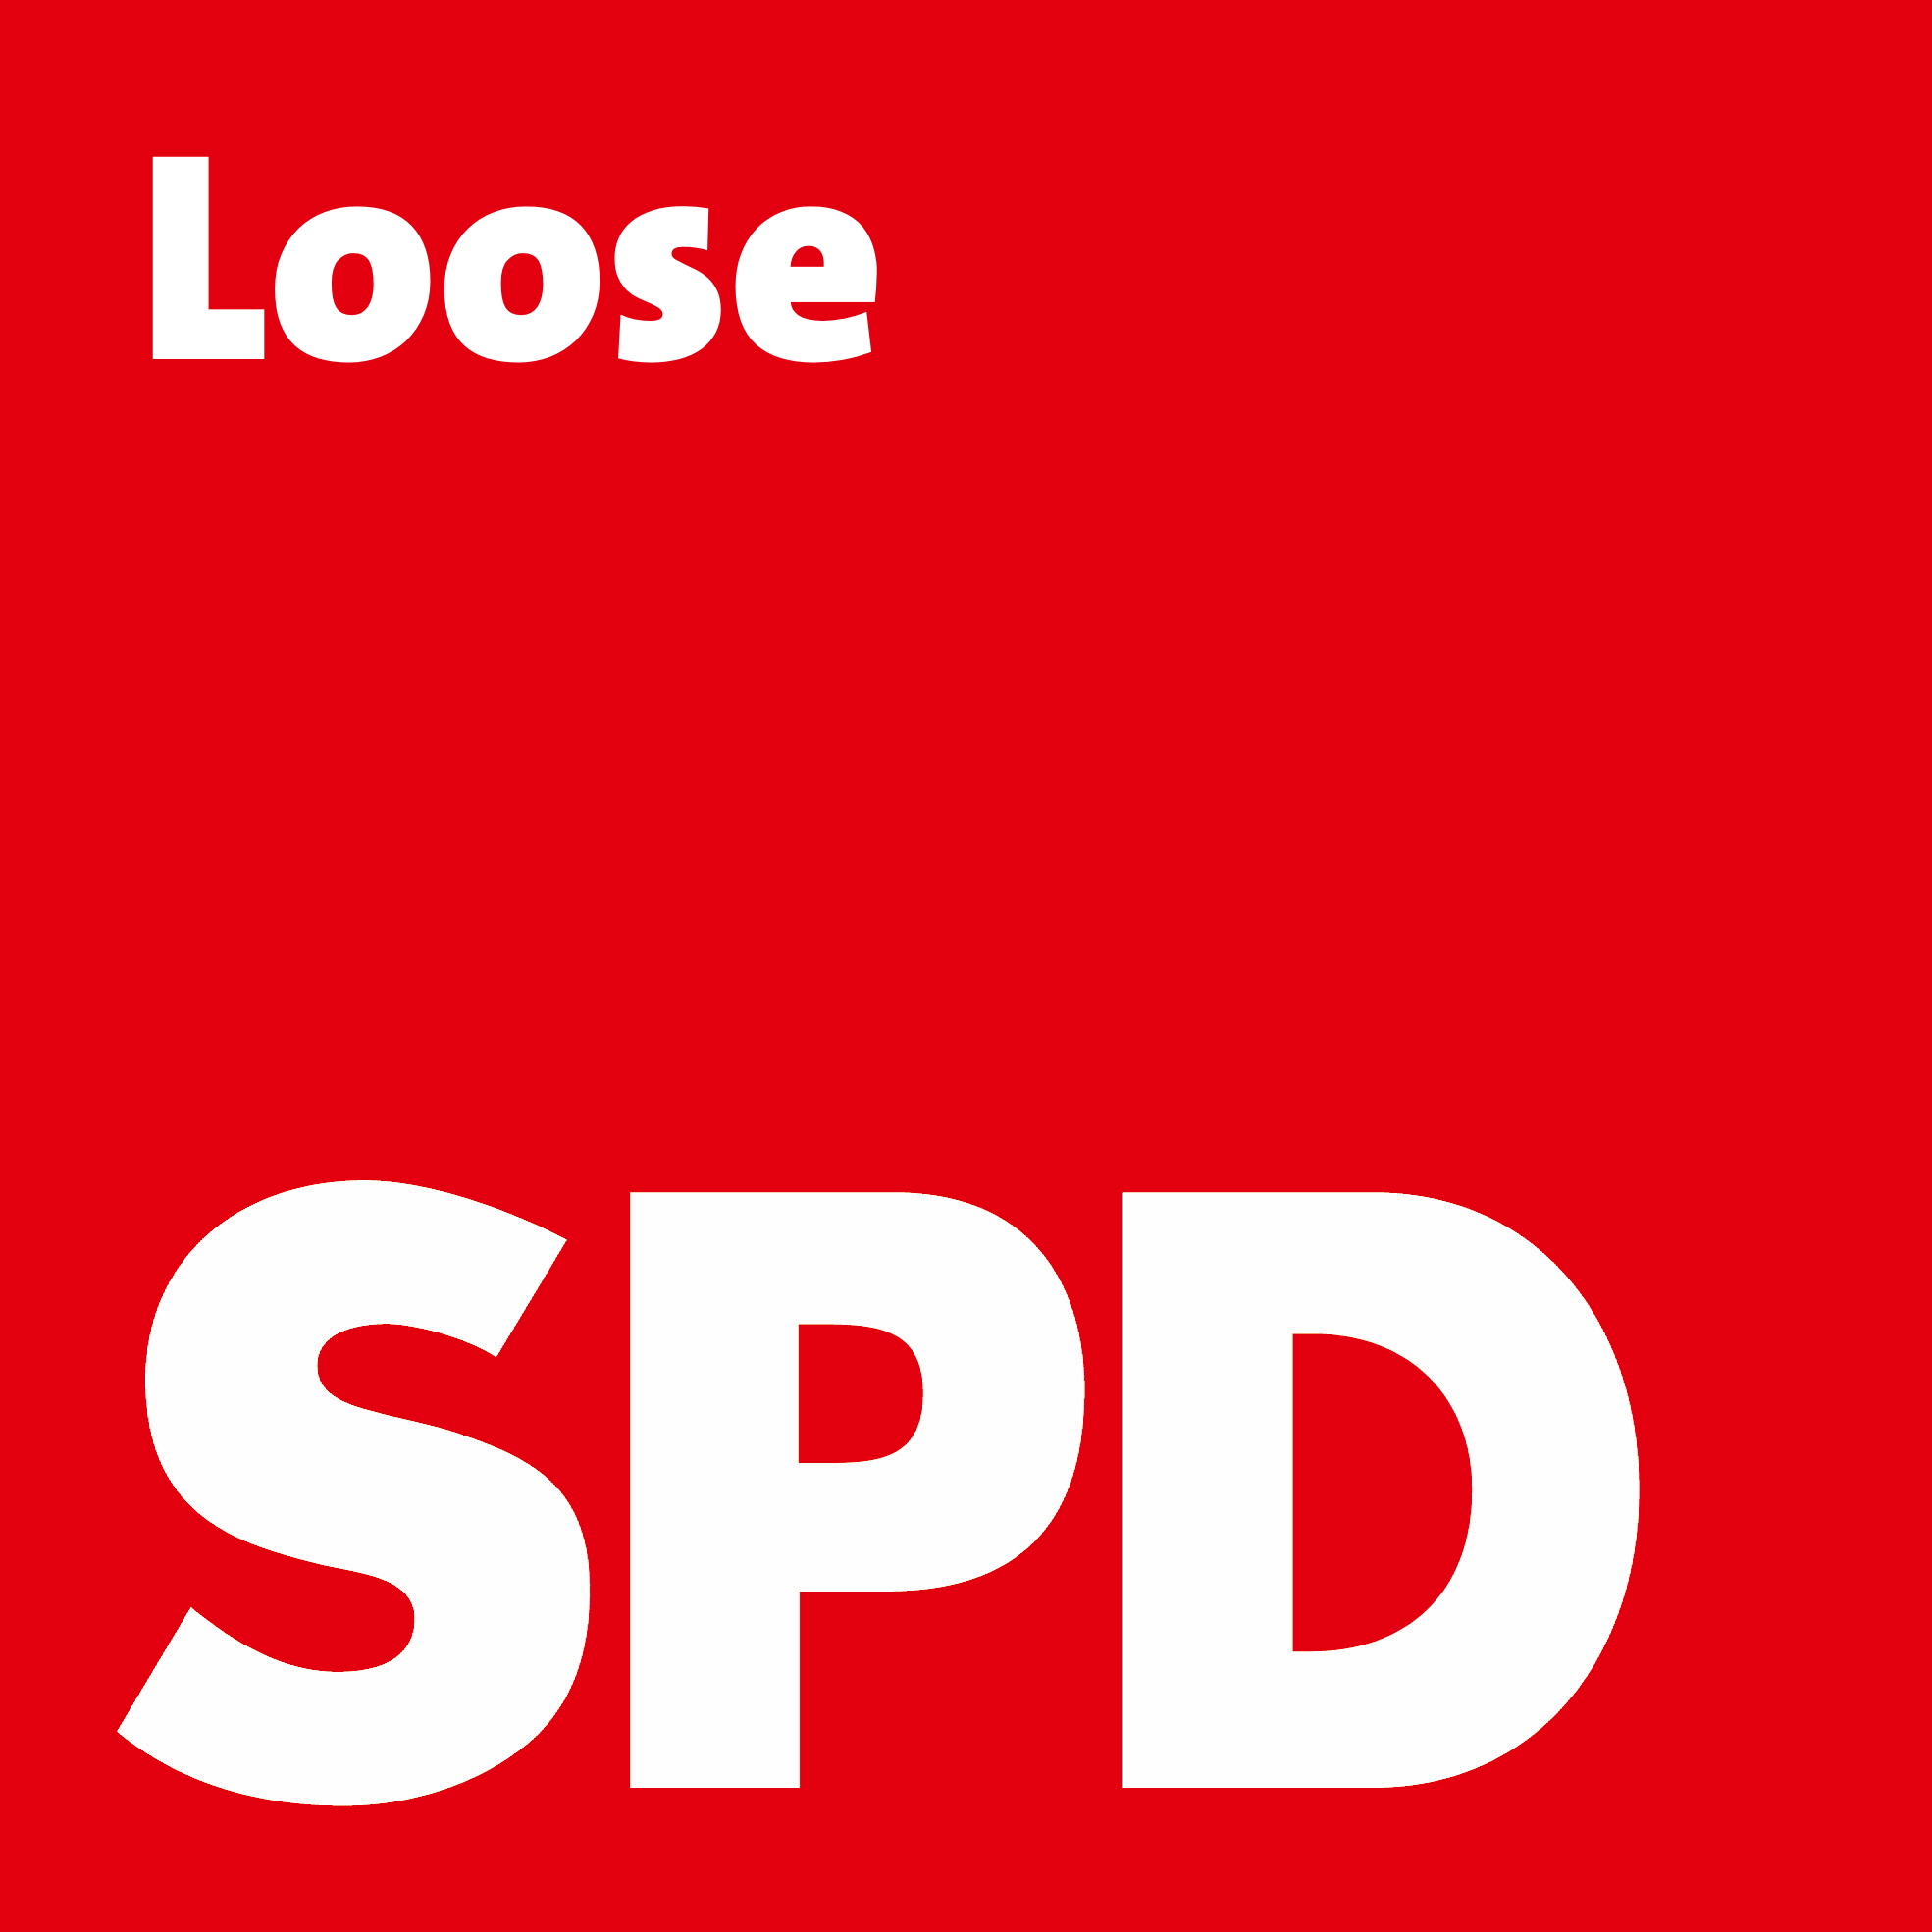 SPD Loose